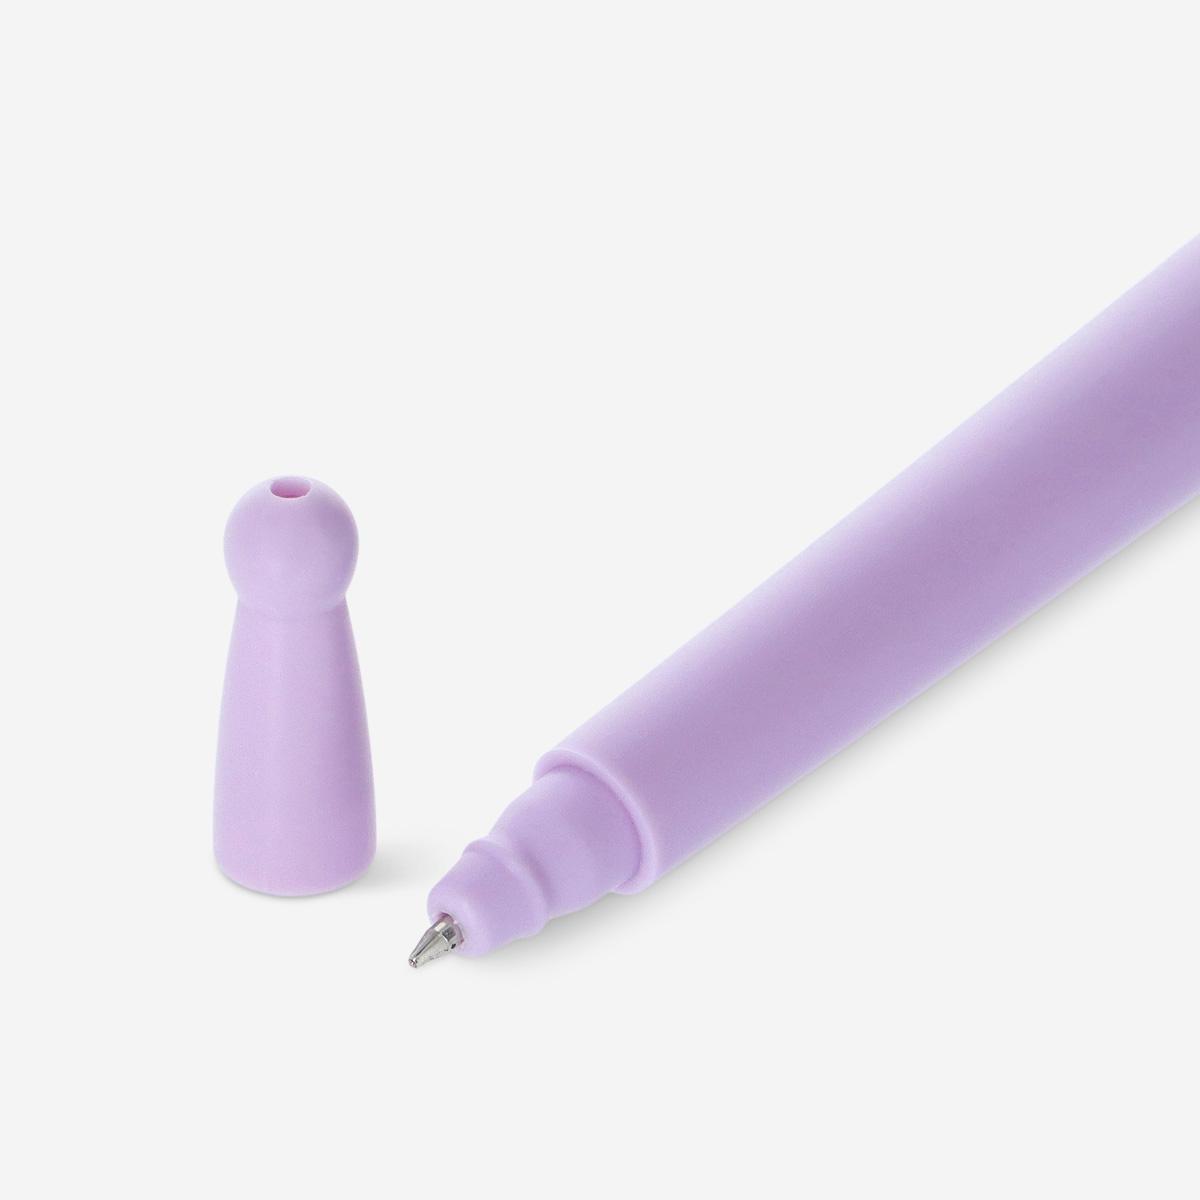 Pink ballpoint pen